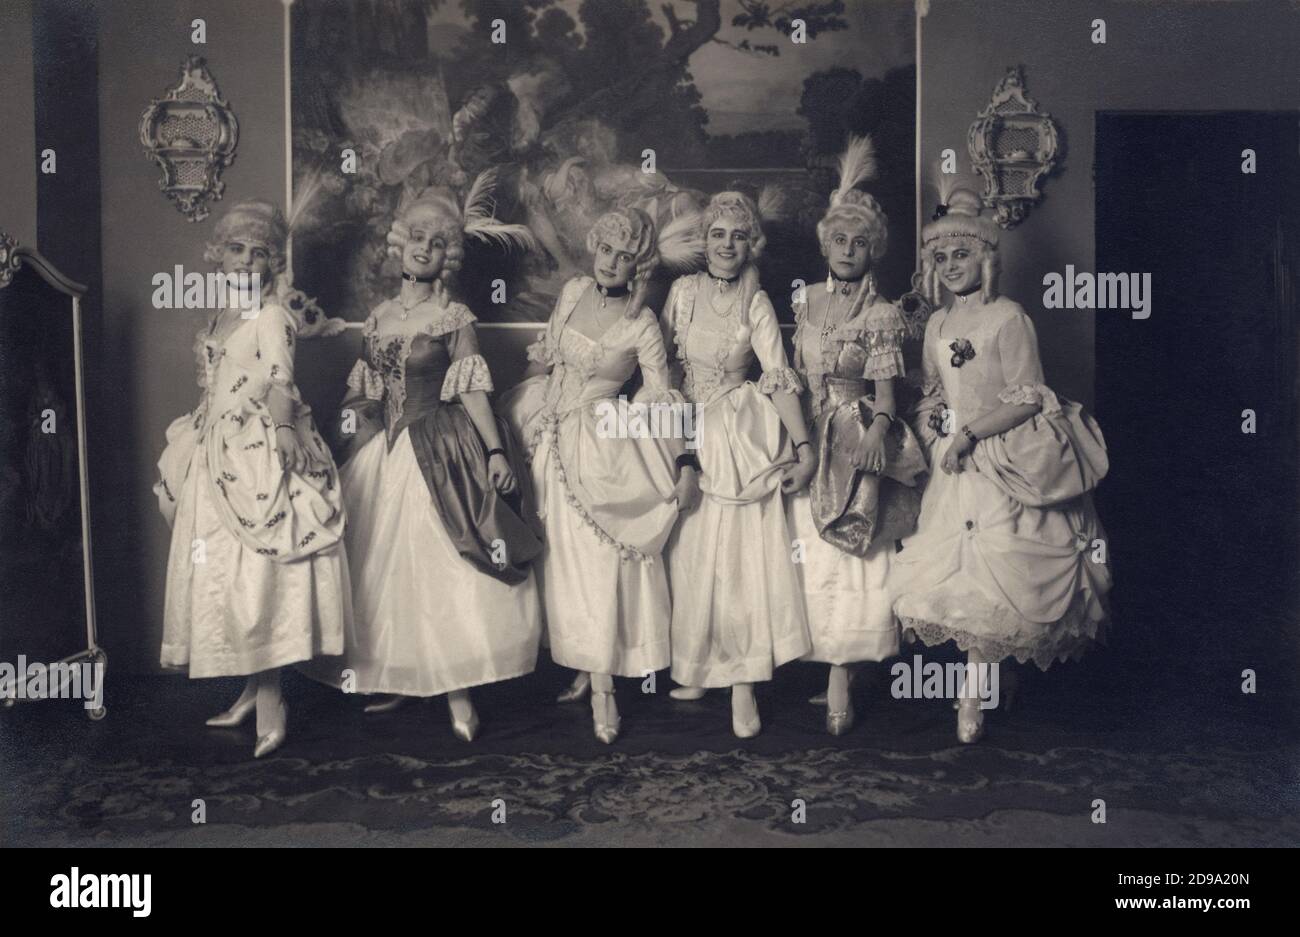 1920 Ca, ITALIEN: Sechs Frauen in Marie Antoinette XVIII Jahrhundert  ausgefallene Kleider für einen Kostümball. - Nobilta' italiana - Adel -  Fancy dress - ritratto - Portrait - Karneval - Festa ballo